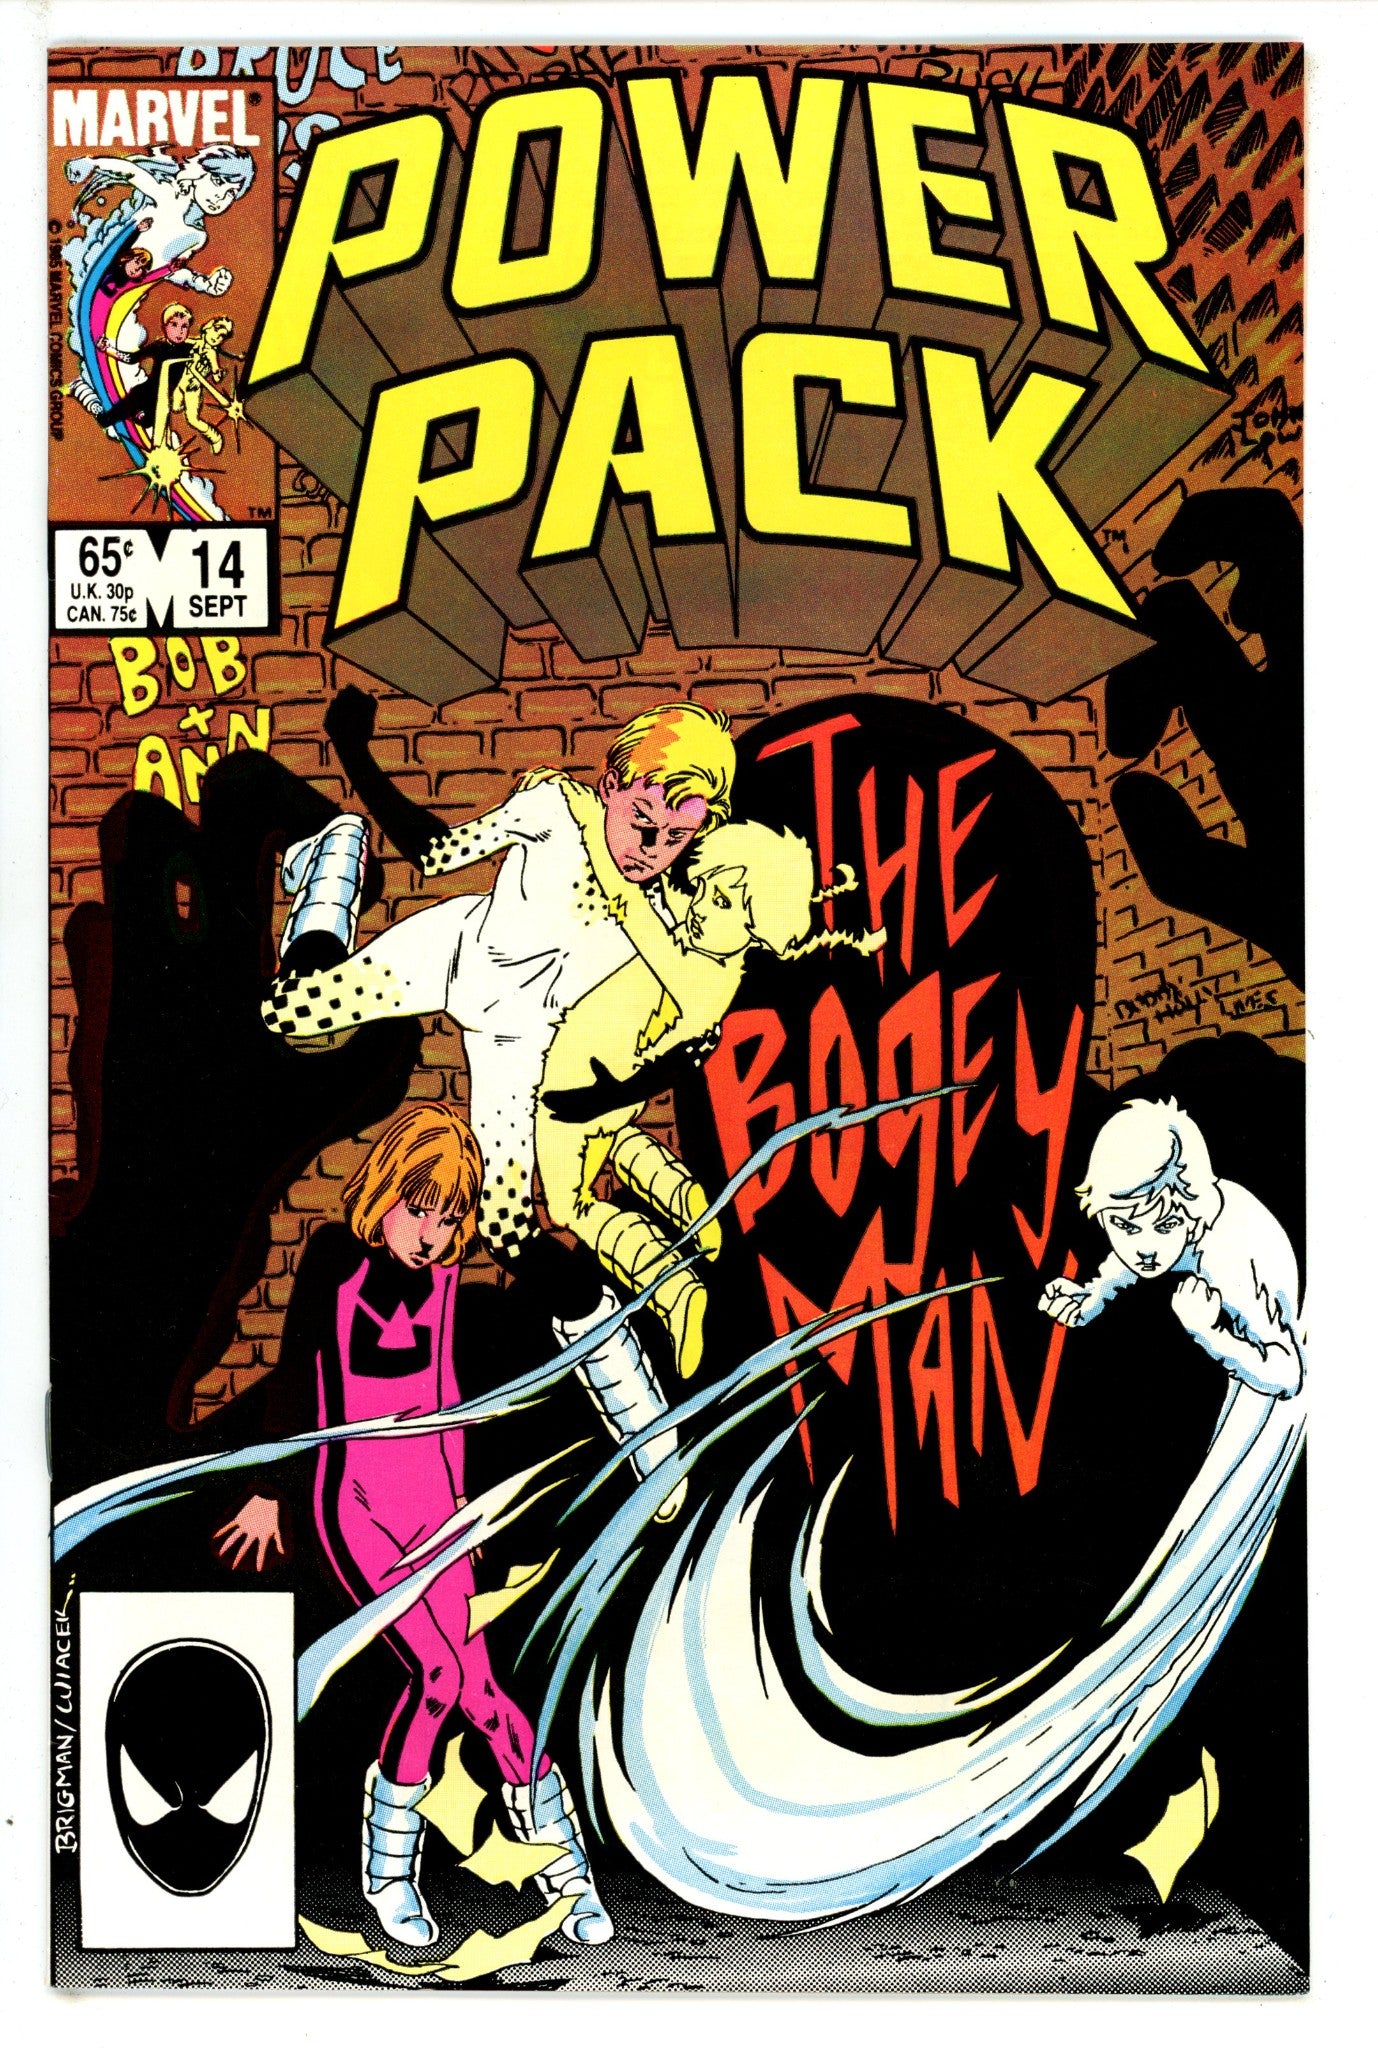 Power Pack Vol 1 14 (1985)